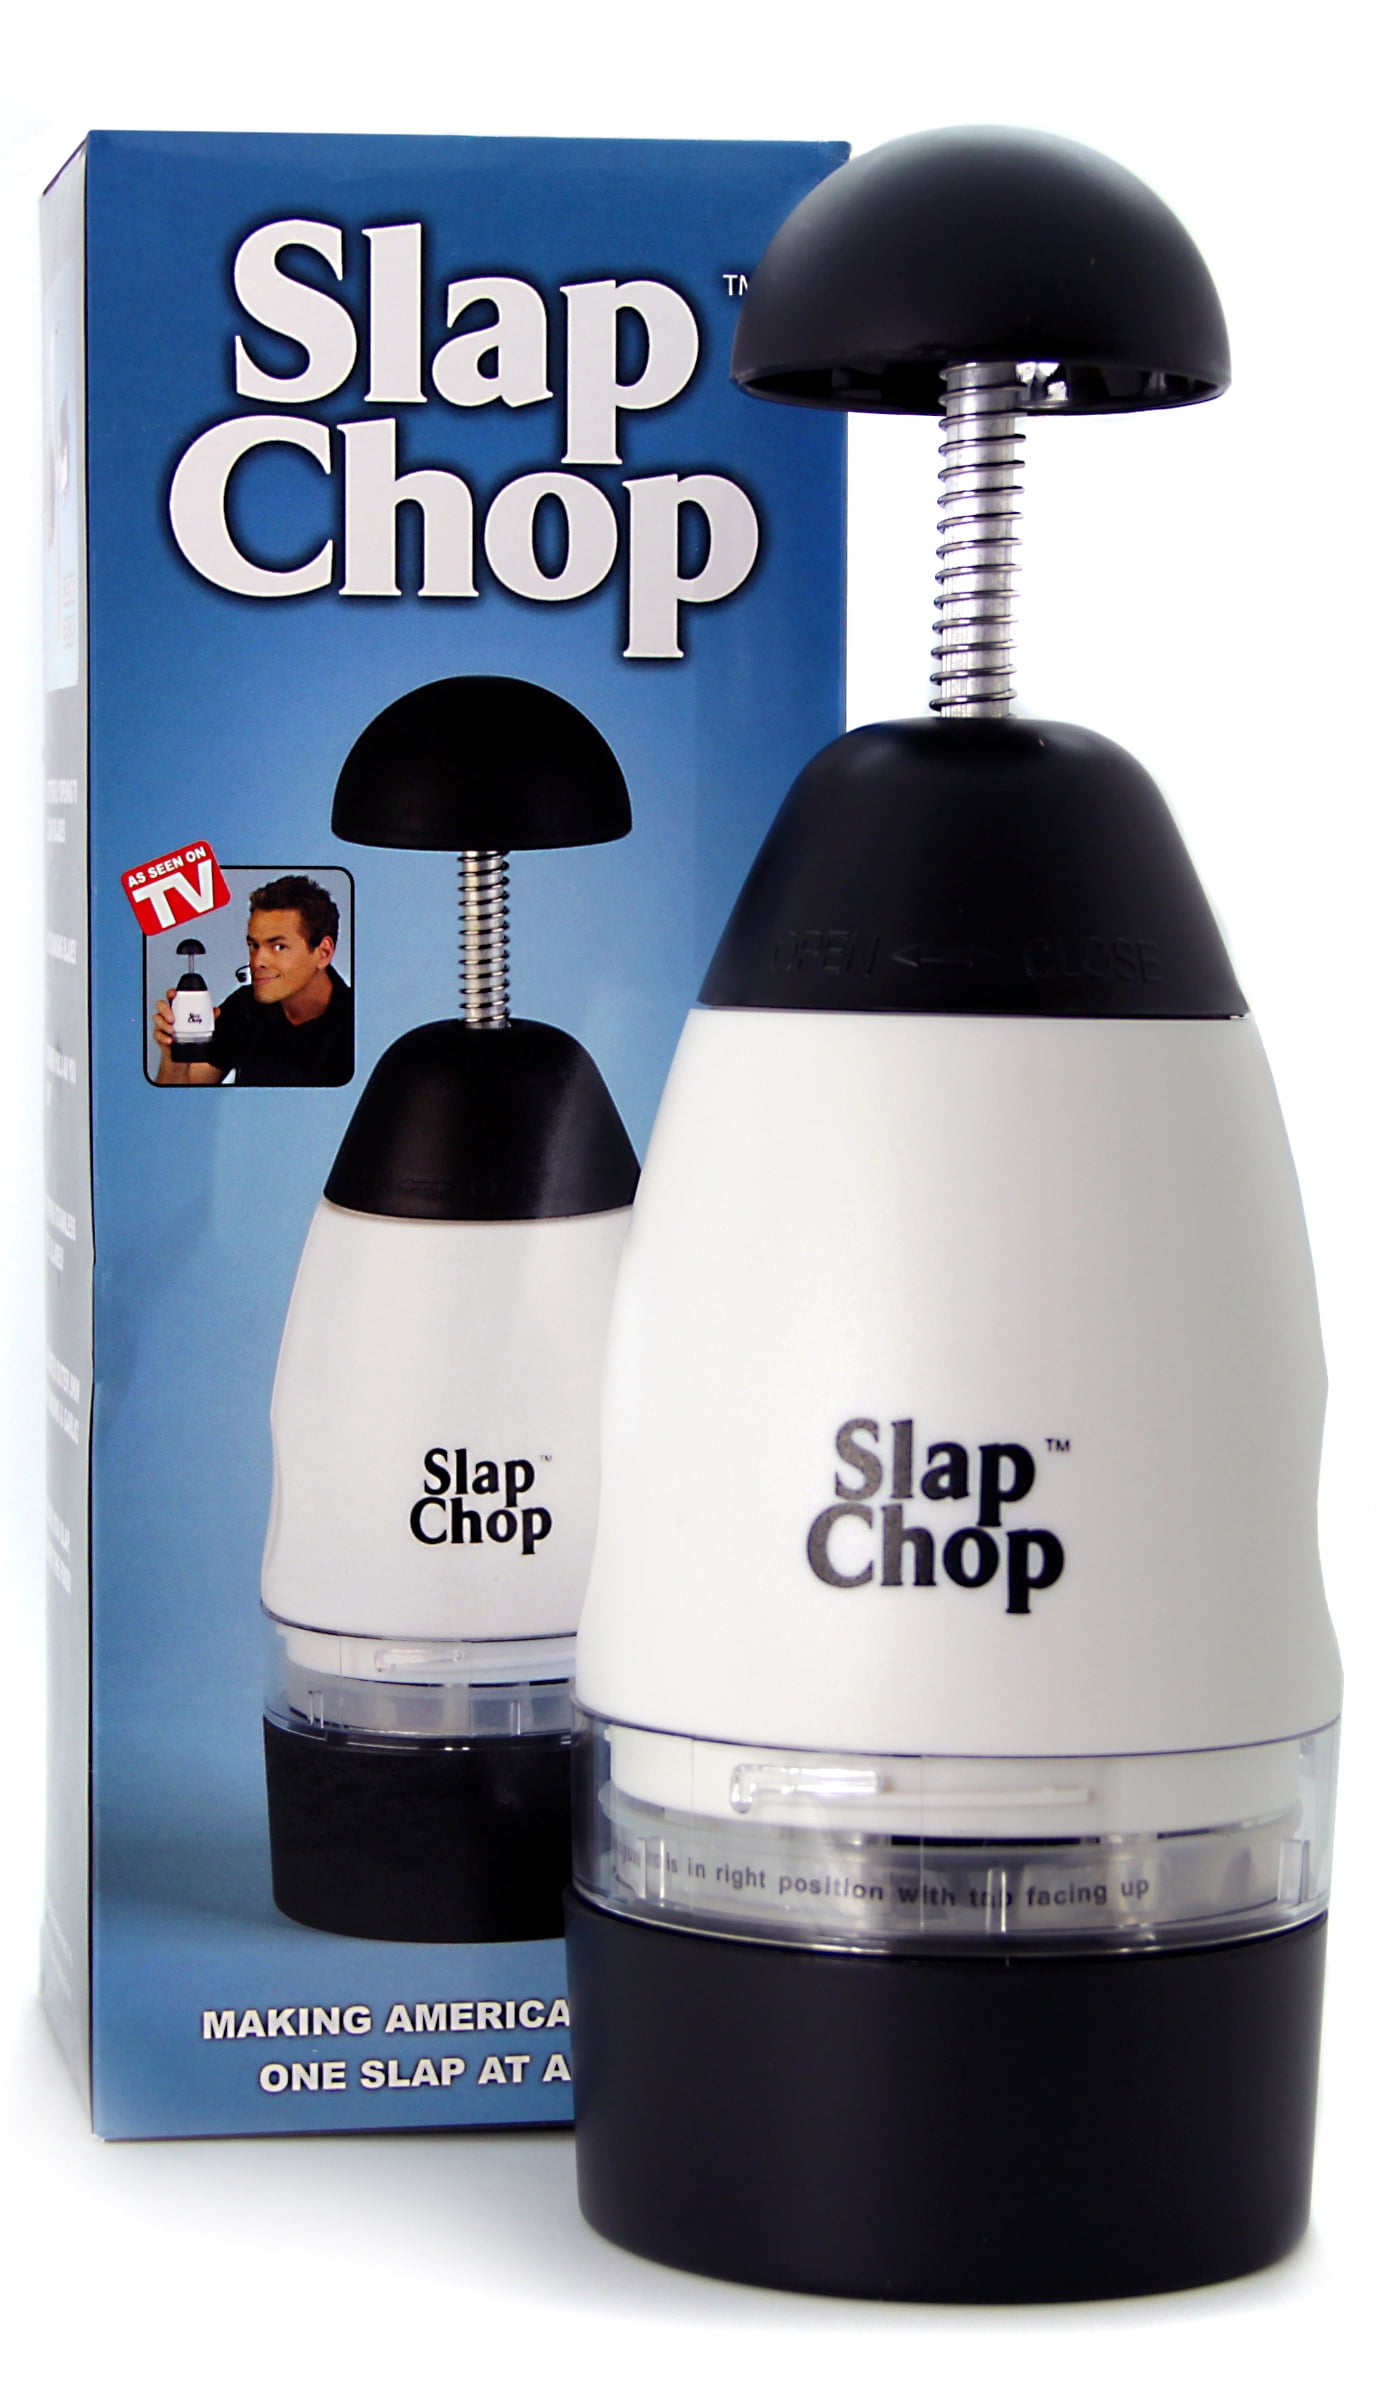 Slap Chop- Portable Stainless Steel Slap Chopper For Vegetable – Orange  Liberty